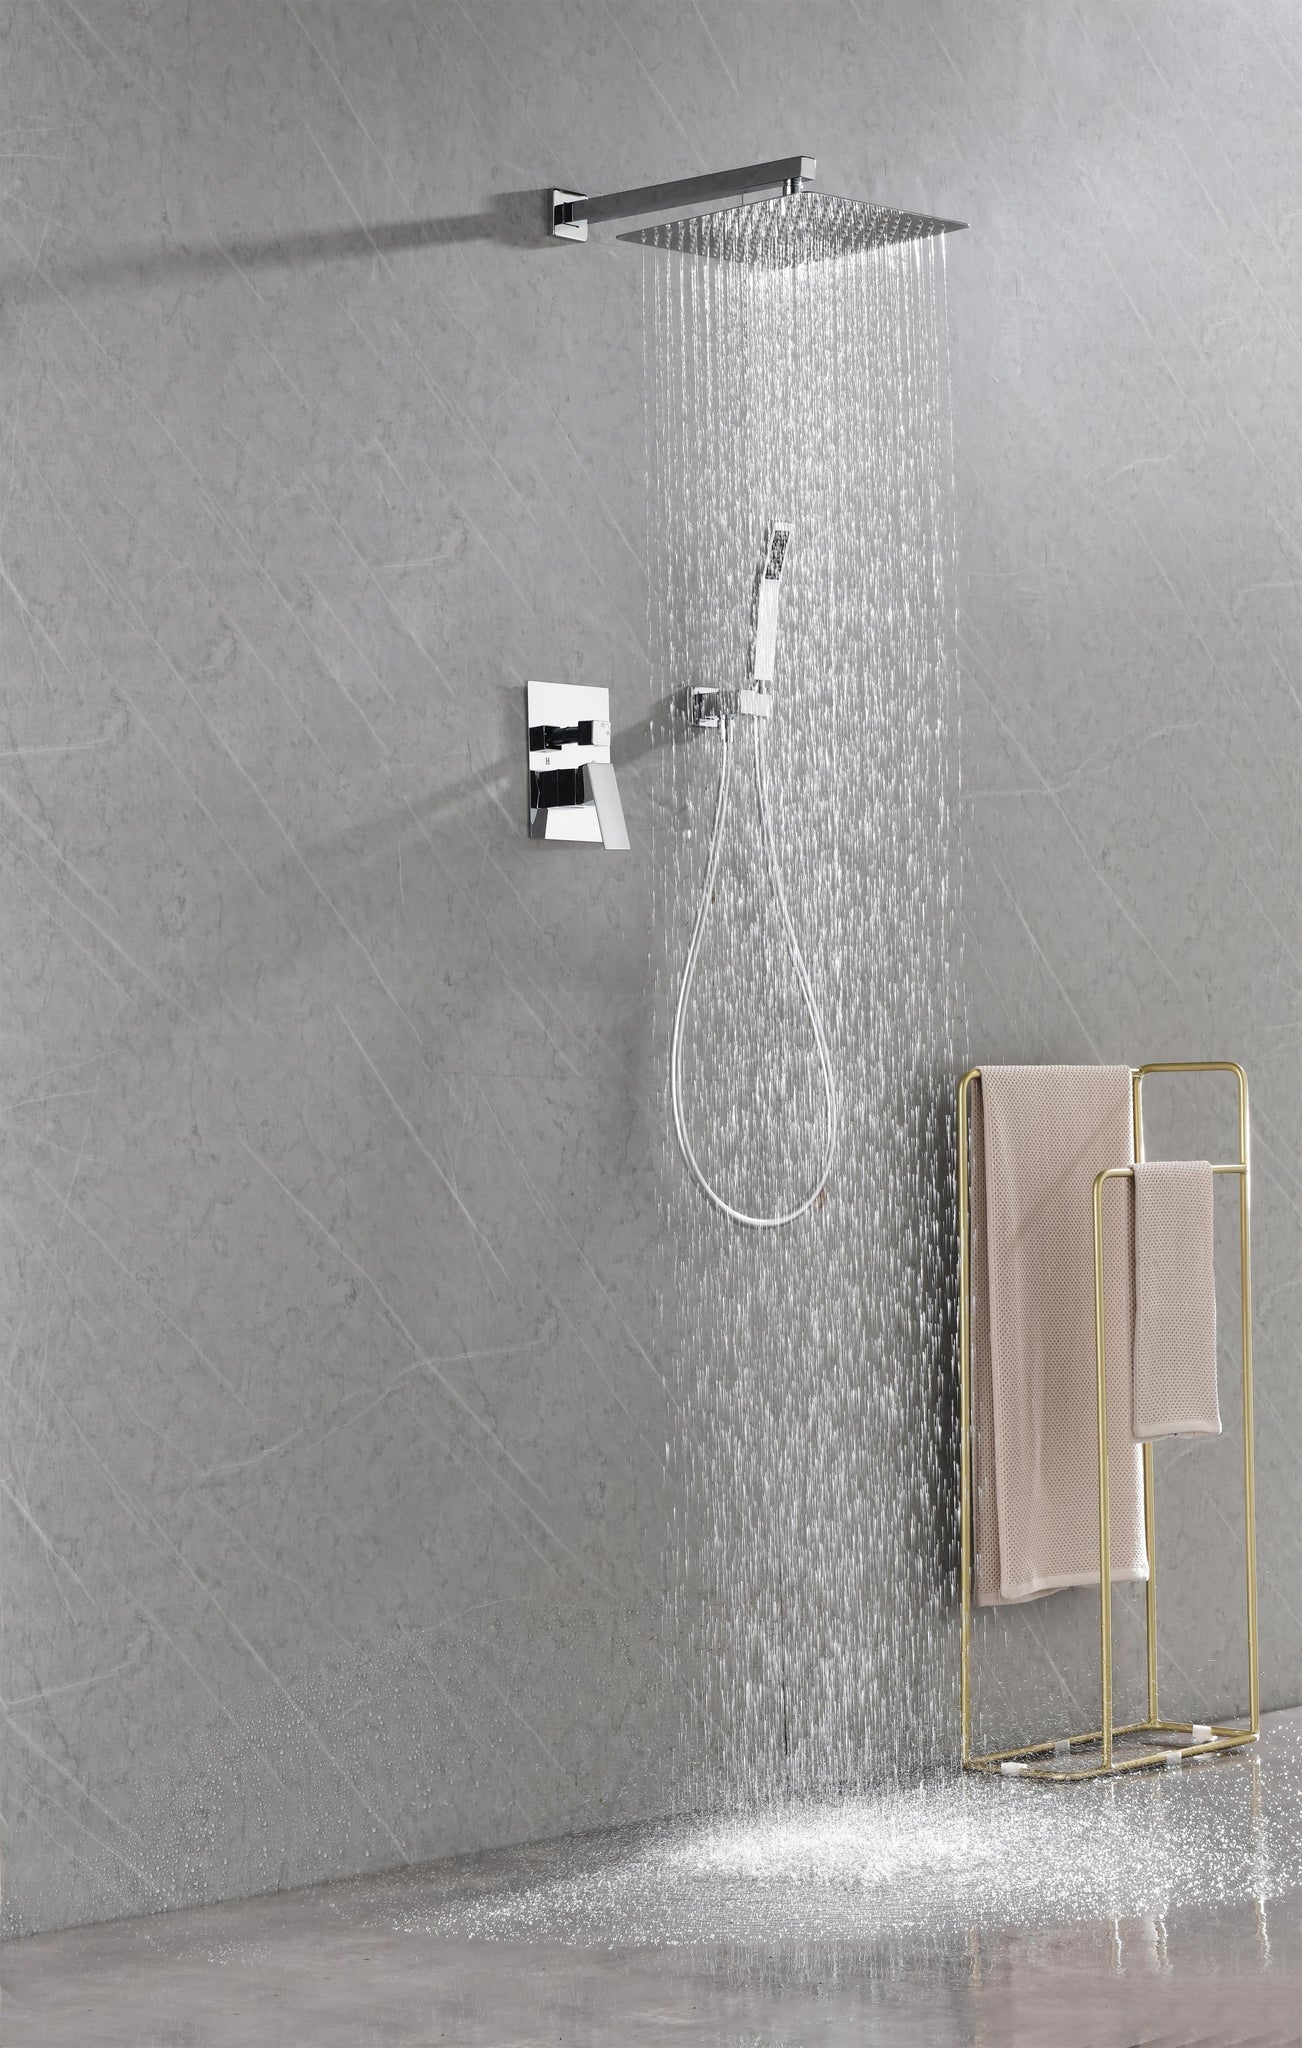 Shower Set System Bathroom Luxury Rain Mixer